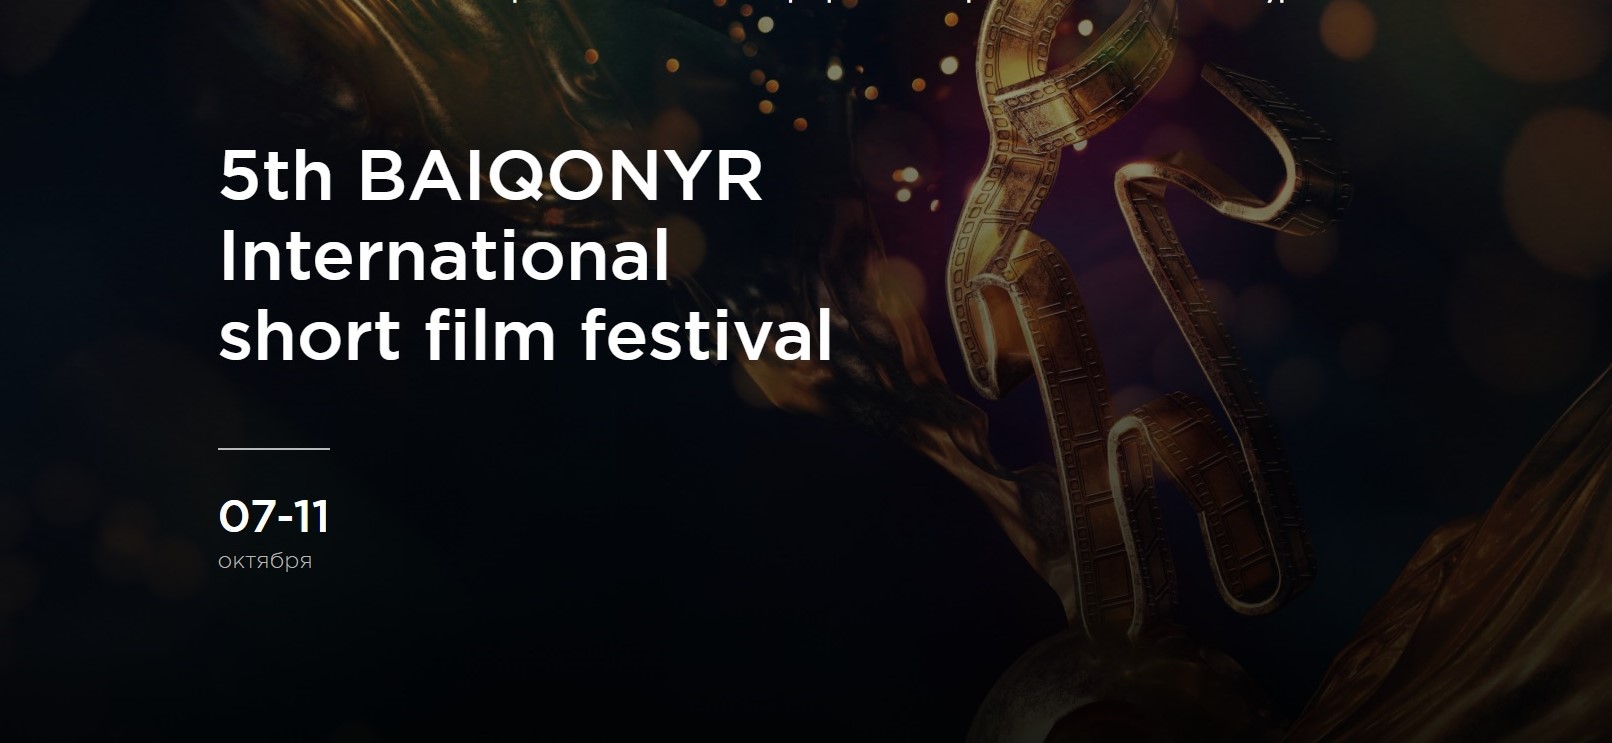 V BAIQONYR International short film festival will take place in October